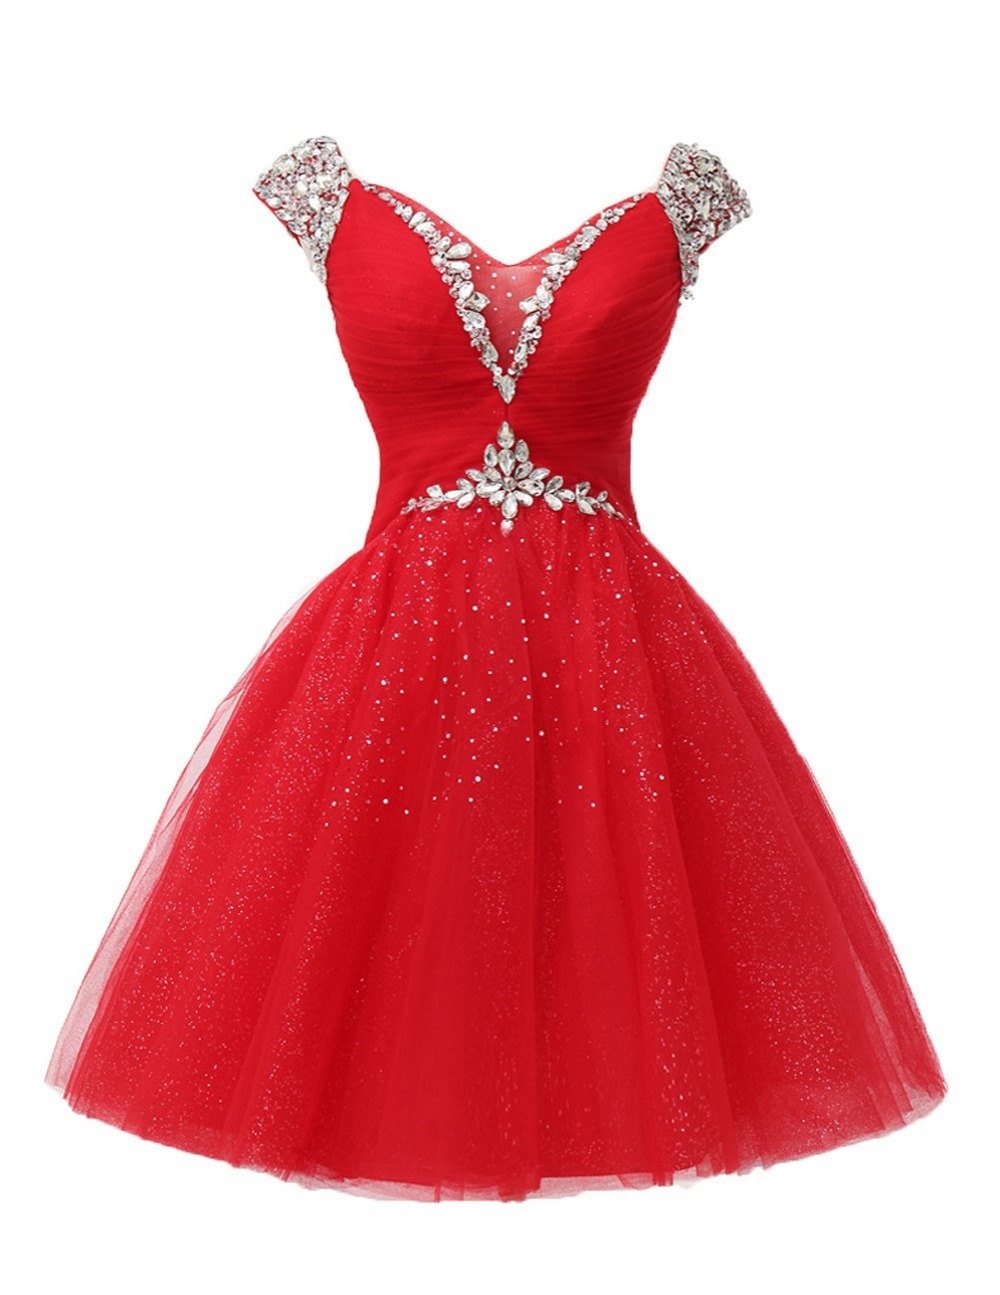 Red Graduation Cocktail Dresses Rhinestone Short Evening Dresses V Neck Crystal Tulle Mini Prom Dresses 2017 Real Photo Women Party Dresses